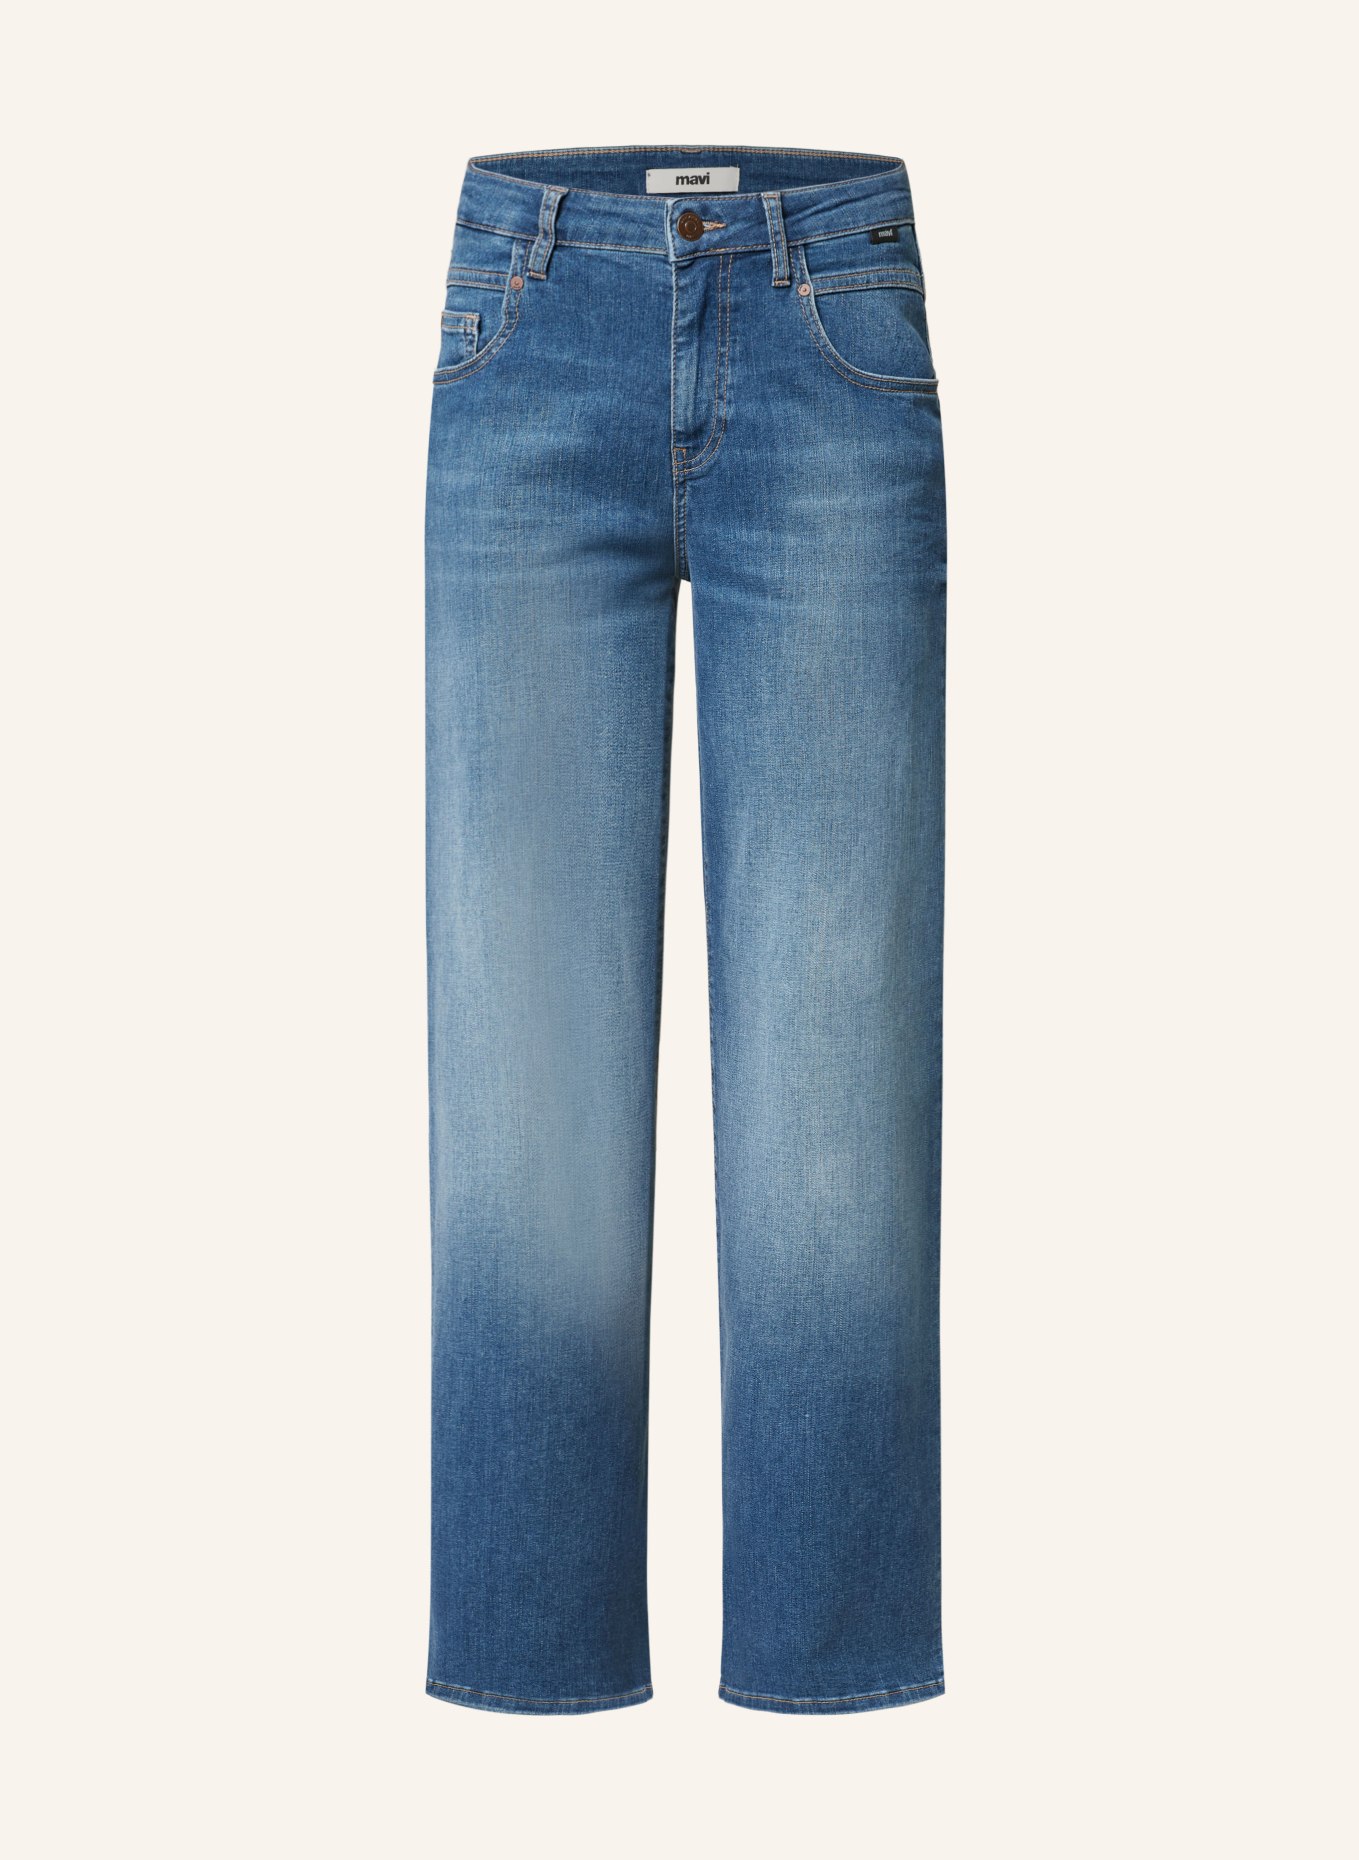 mavi Jeans MALIBU, Farbe: 86890 dark shaded glam (Bild 1)